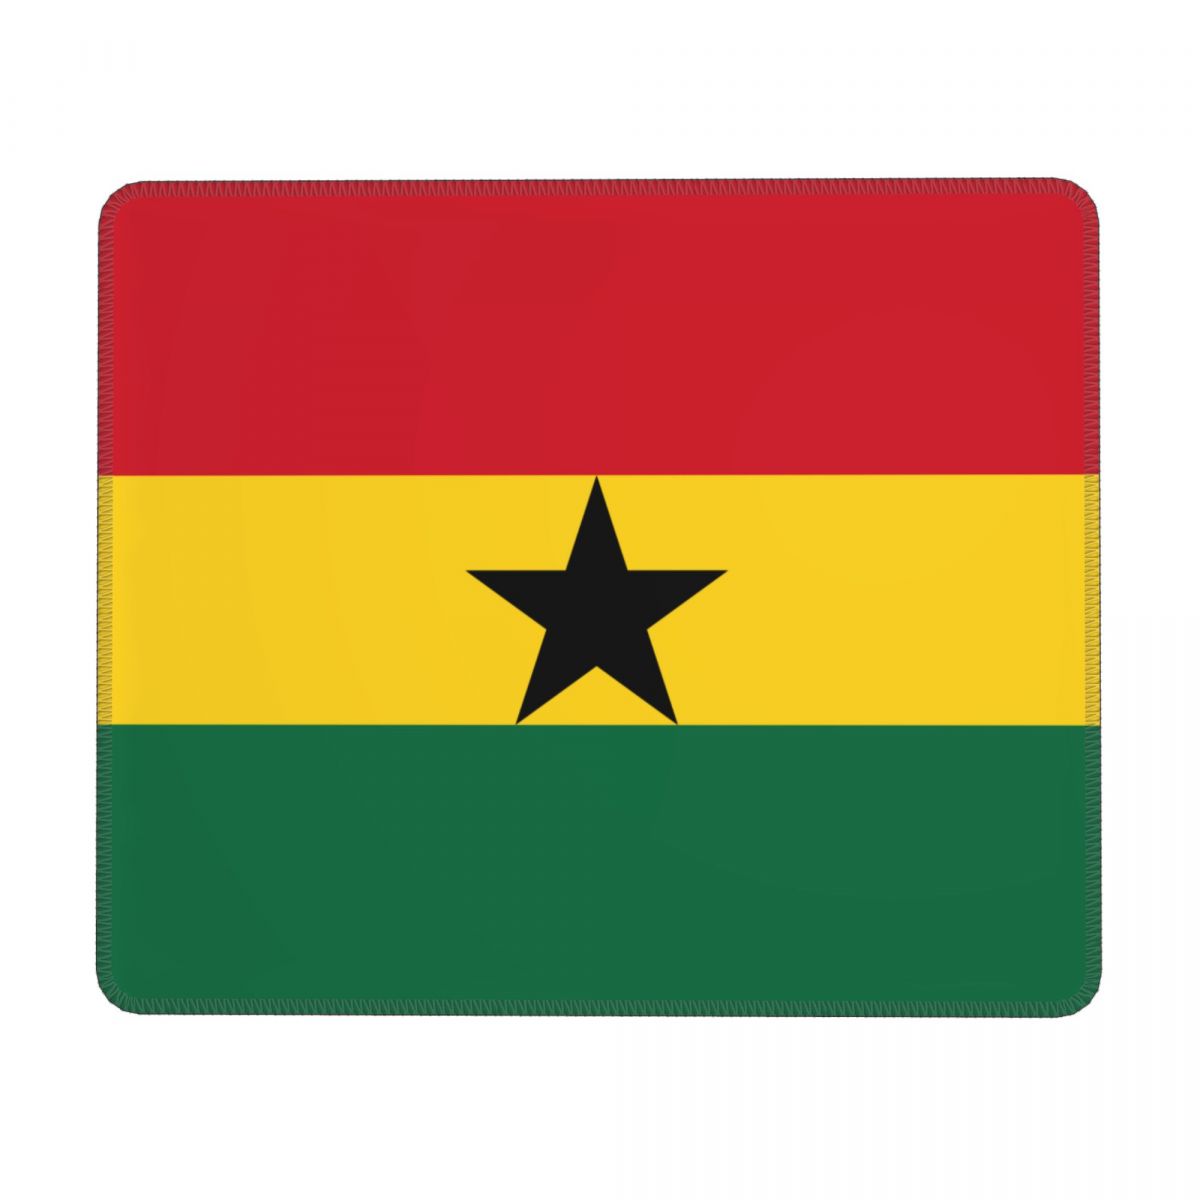 Ghana Flag Square Rubber Base MousePads